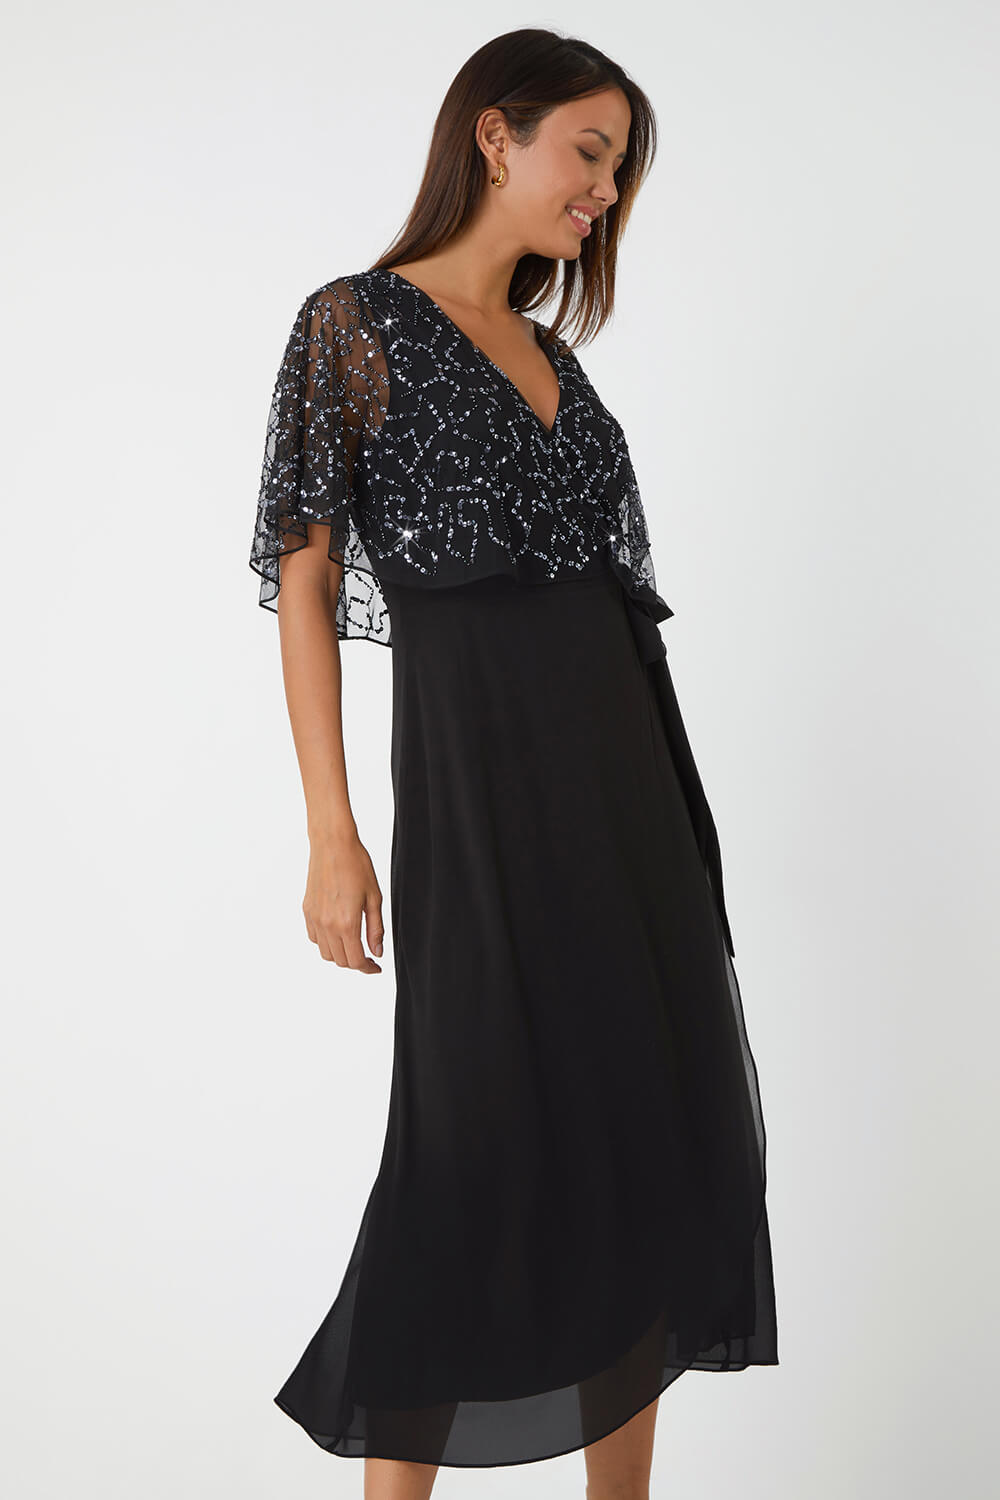 Black Sequin Embellished Maxi Wrap Dress, Image 4 of 5